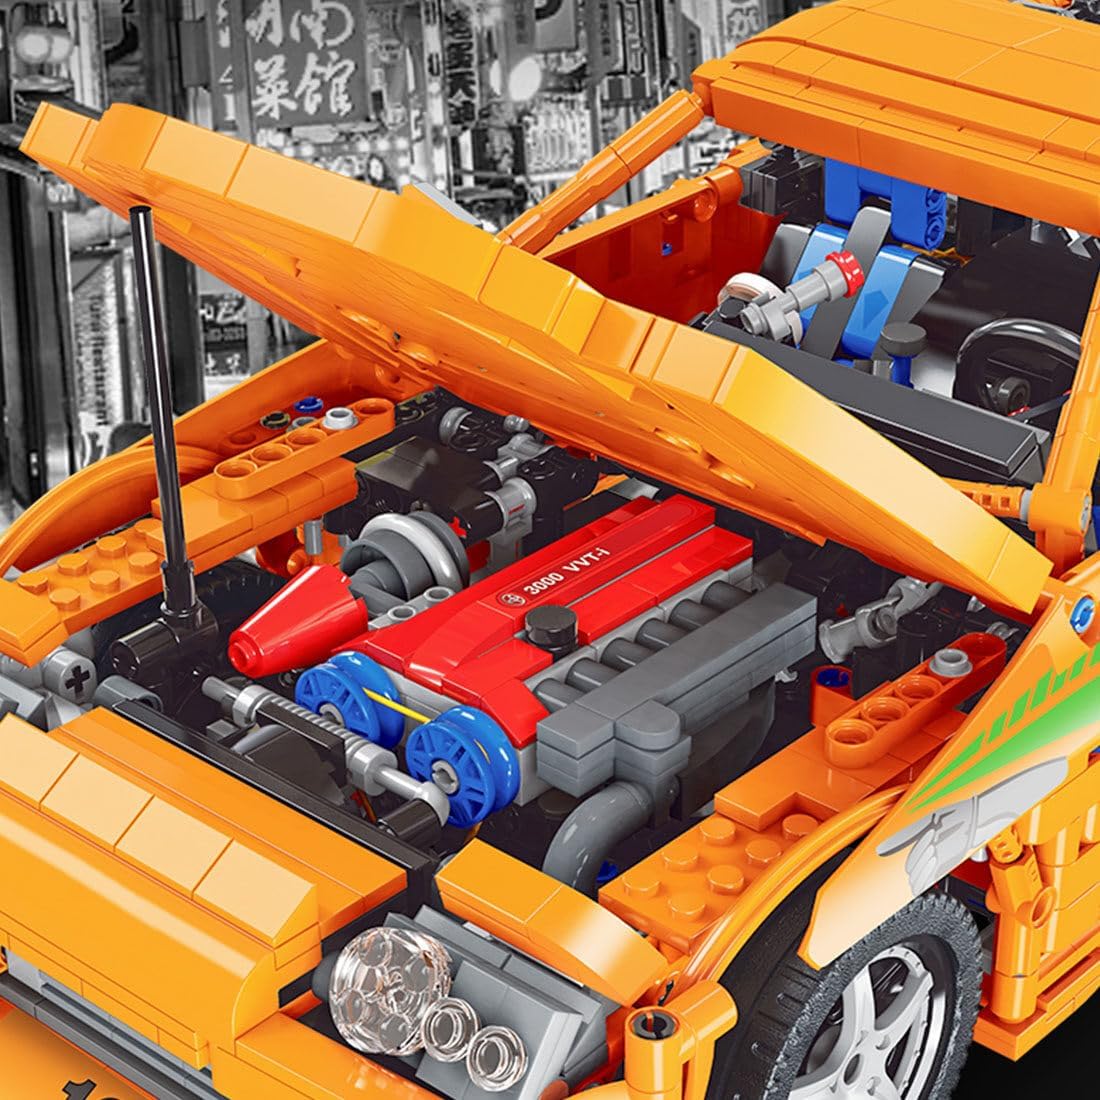 Technic Supercar A80 Building Kit, Sports Car Series Building Blocks Set (2225PCS) - Static Version